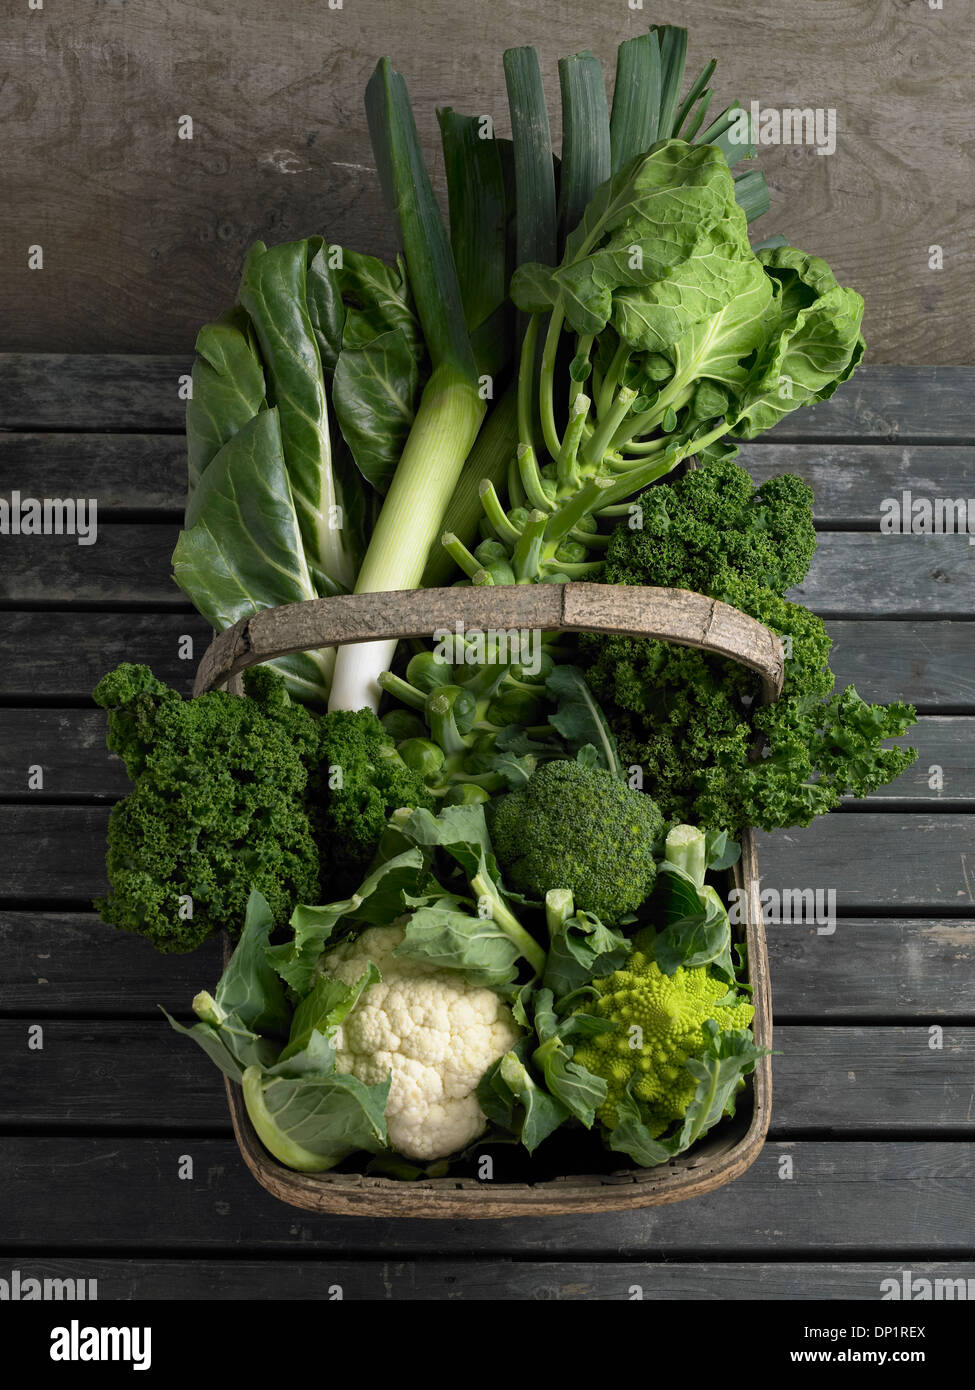 green leaf vegetables Stock Photo